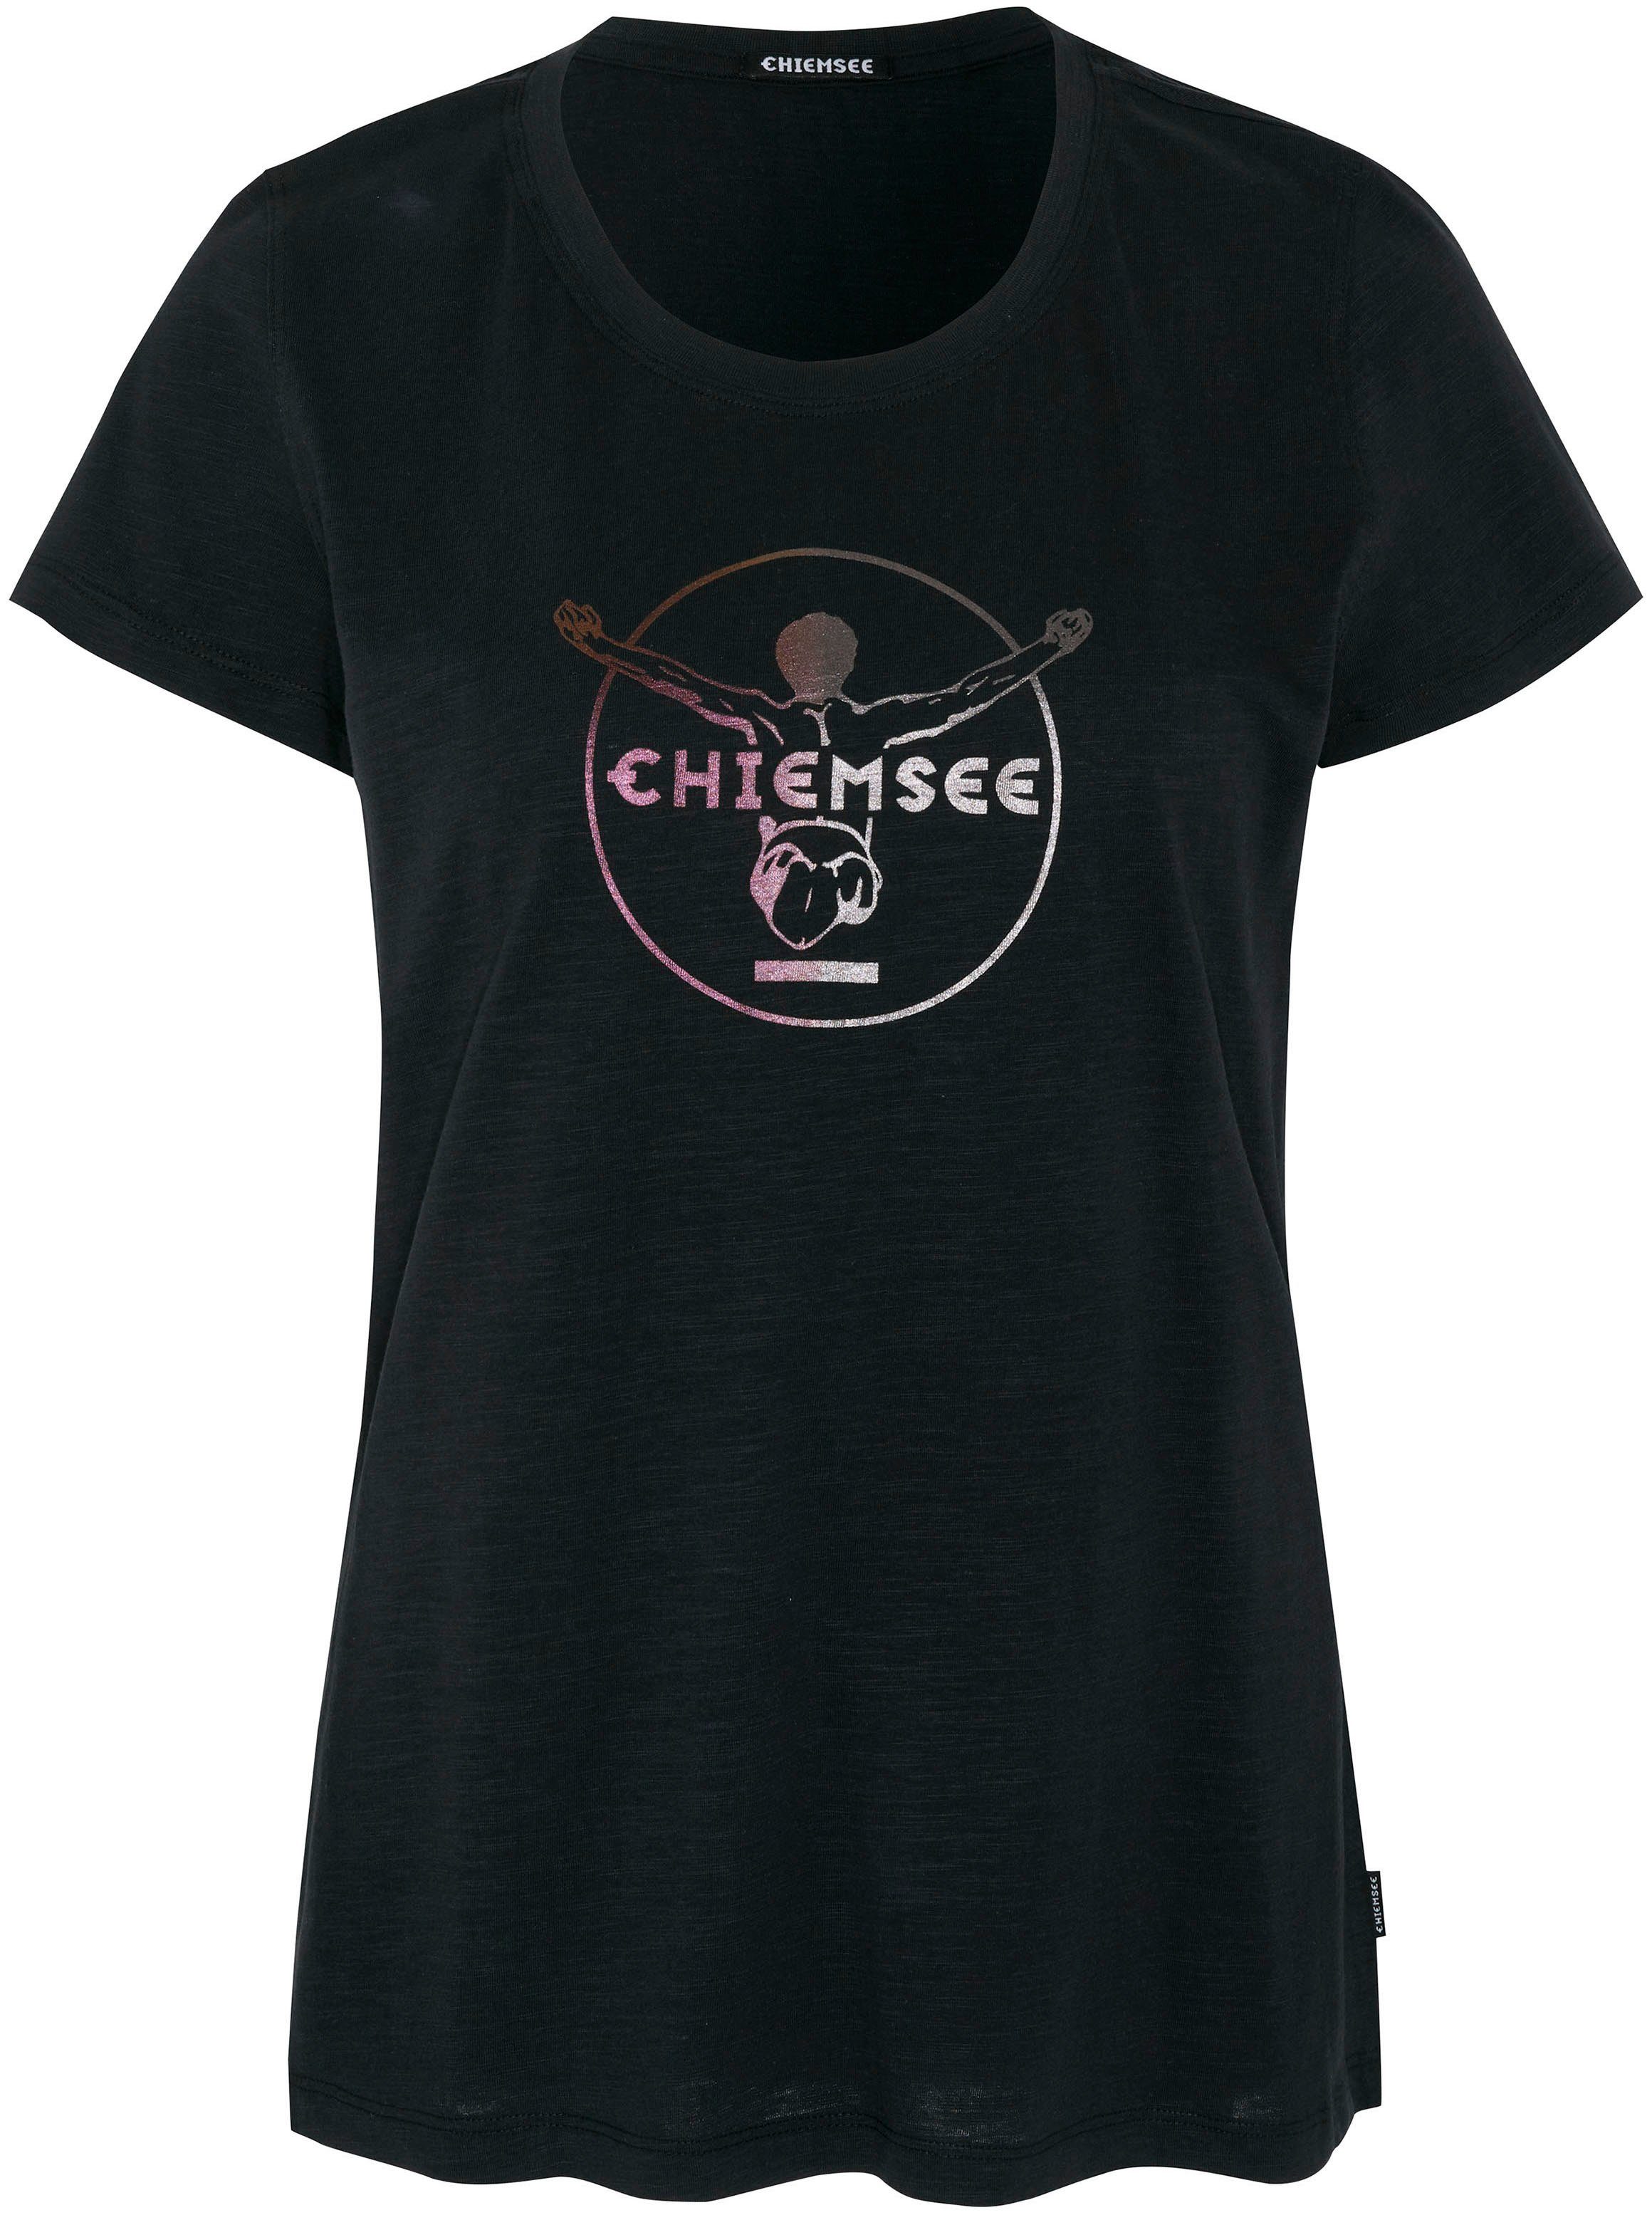 Chiemsee Black T-Shirt Deep